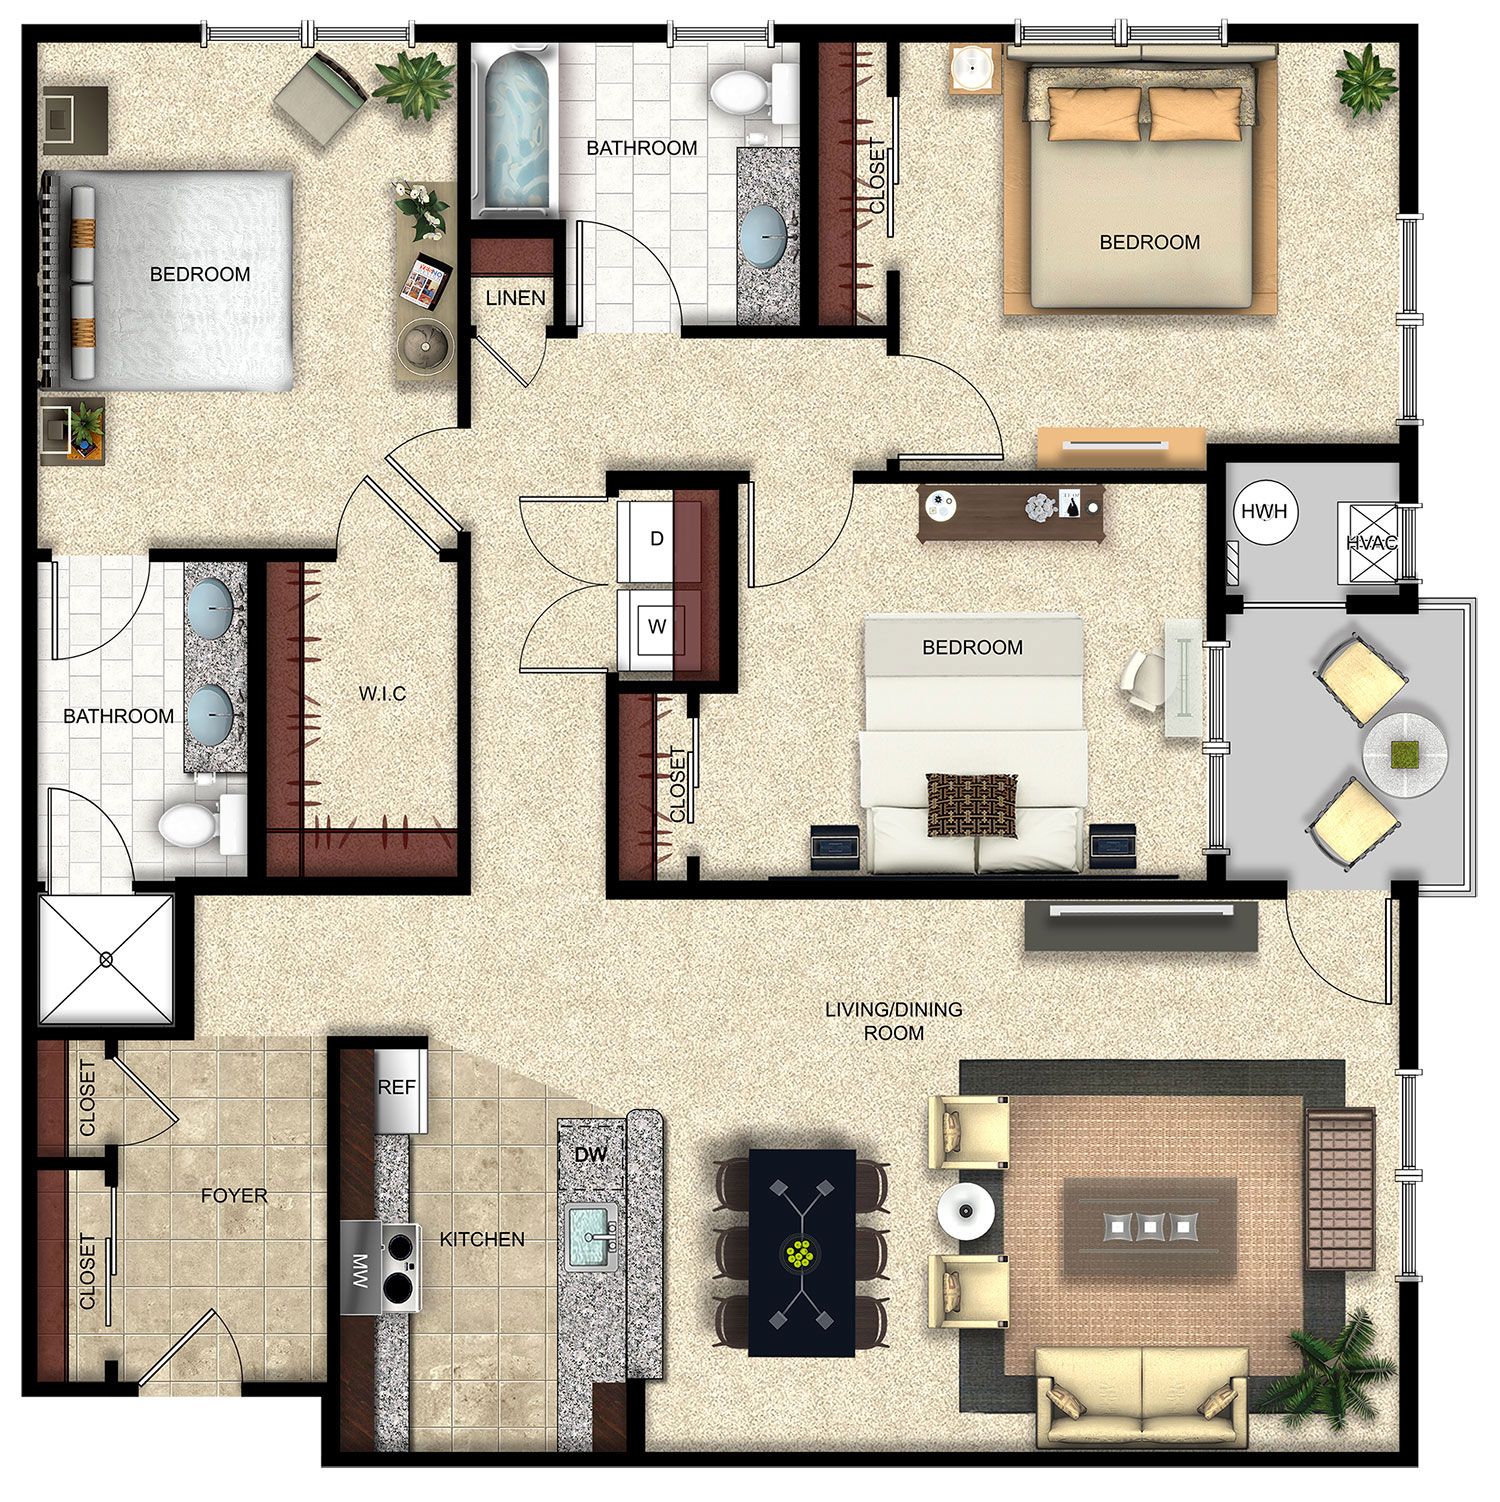 Large three bedroom floor plan with foyer in Secaucus NJ